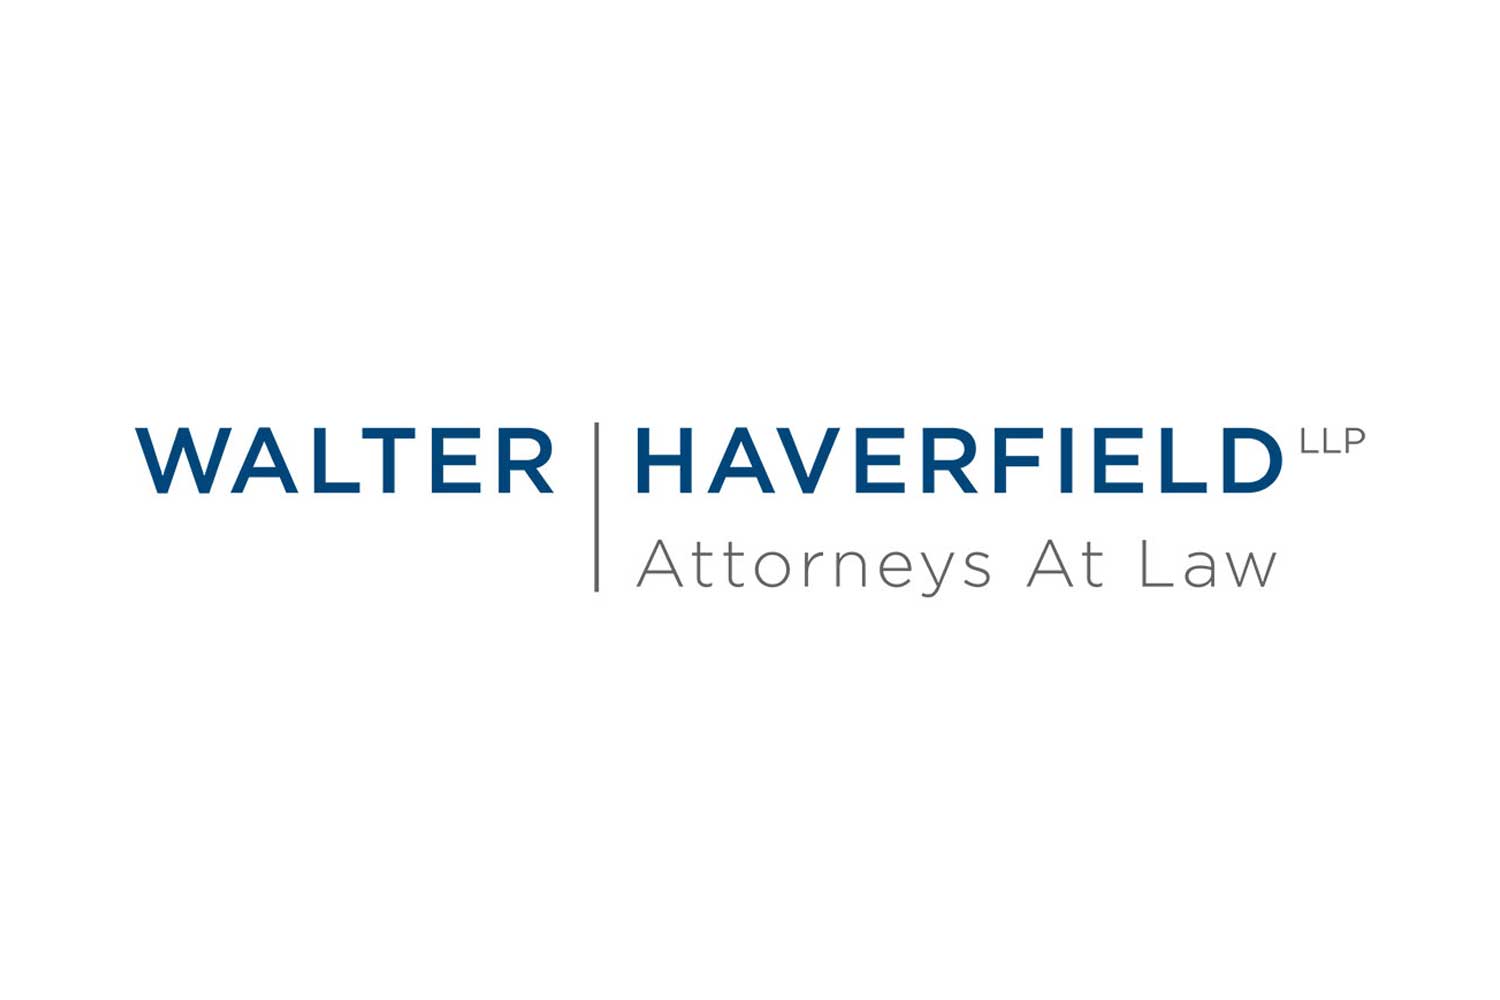 Walter Haverfield logo.